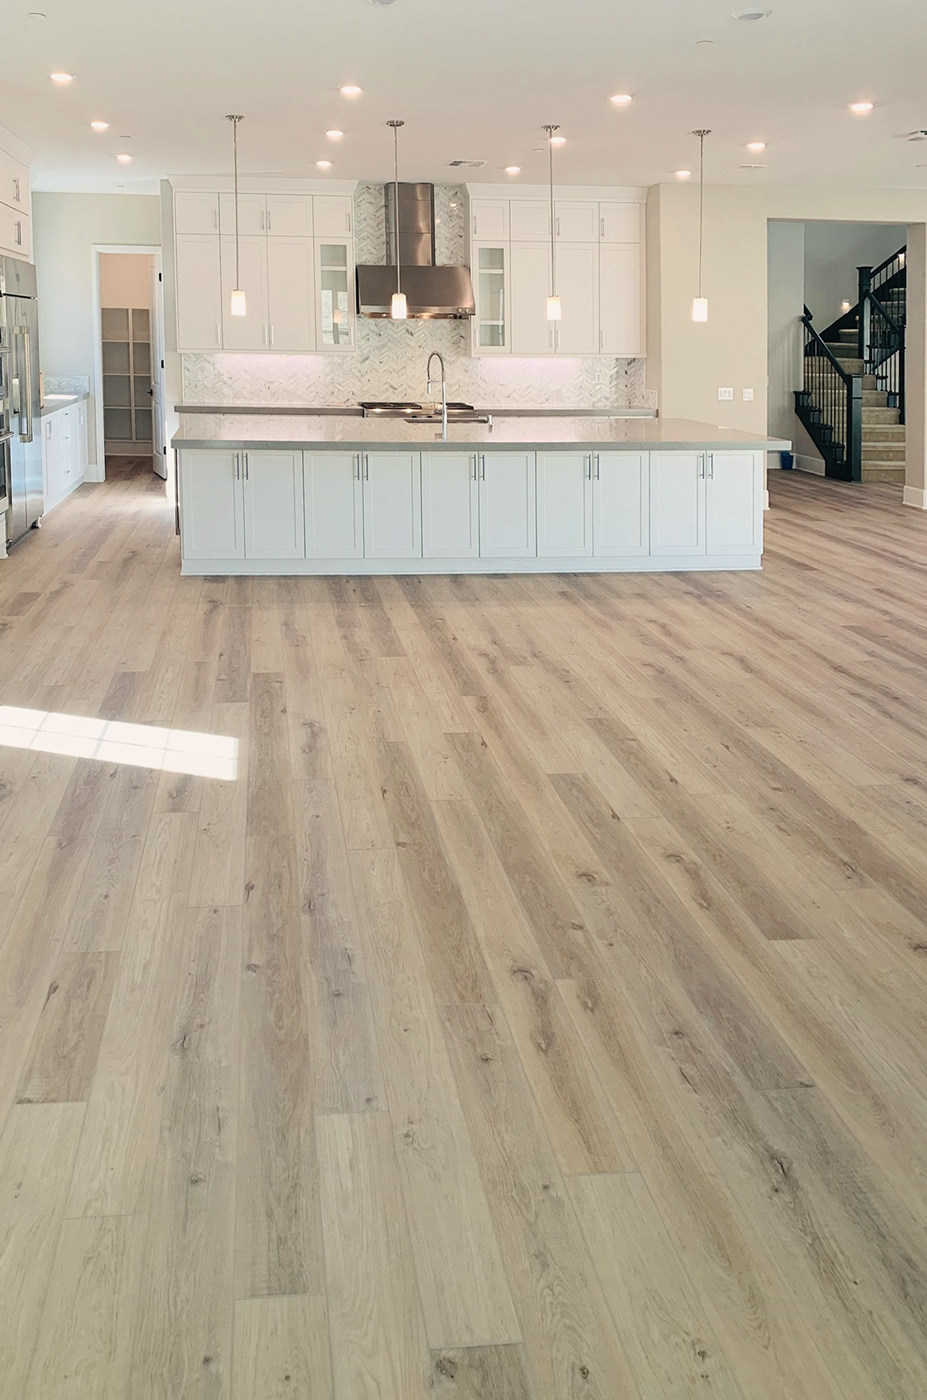 Provenza At Ease Moda Living Waterproof Lvp Pro2600 Hardwood Flooring Laminate Floors Ca California